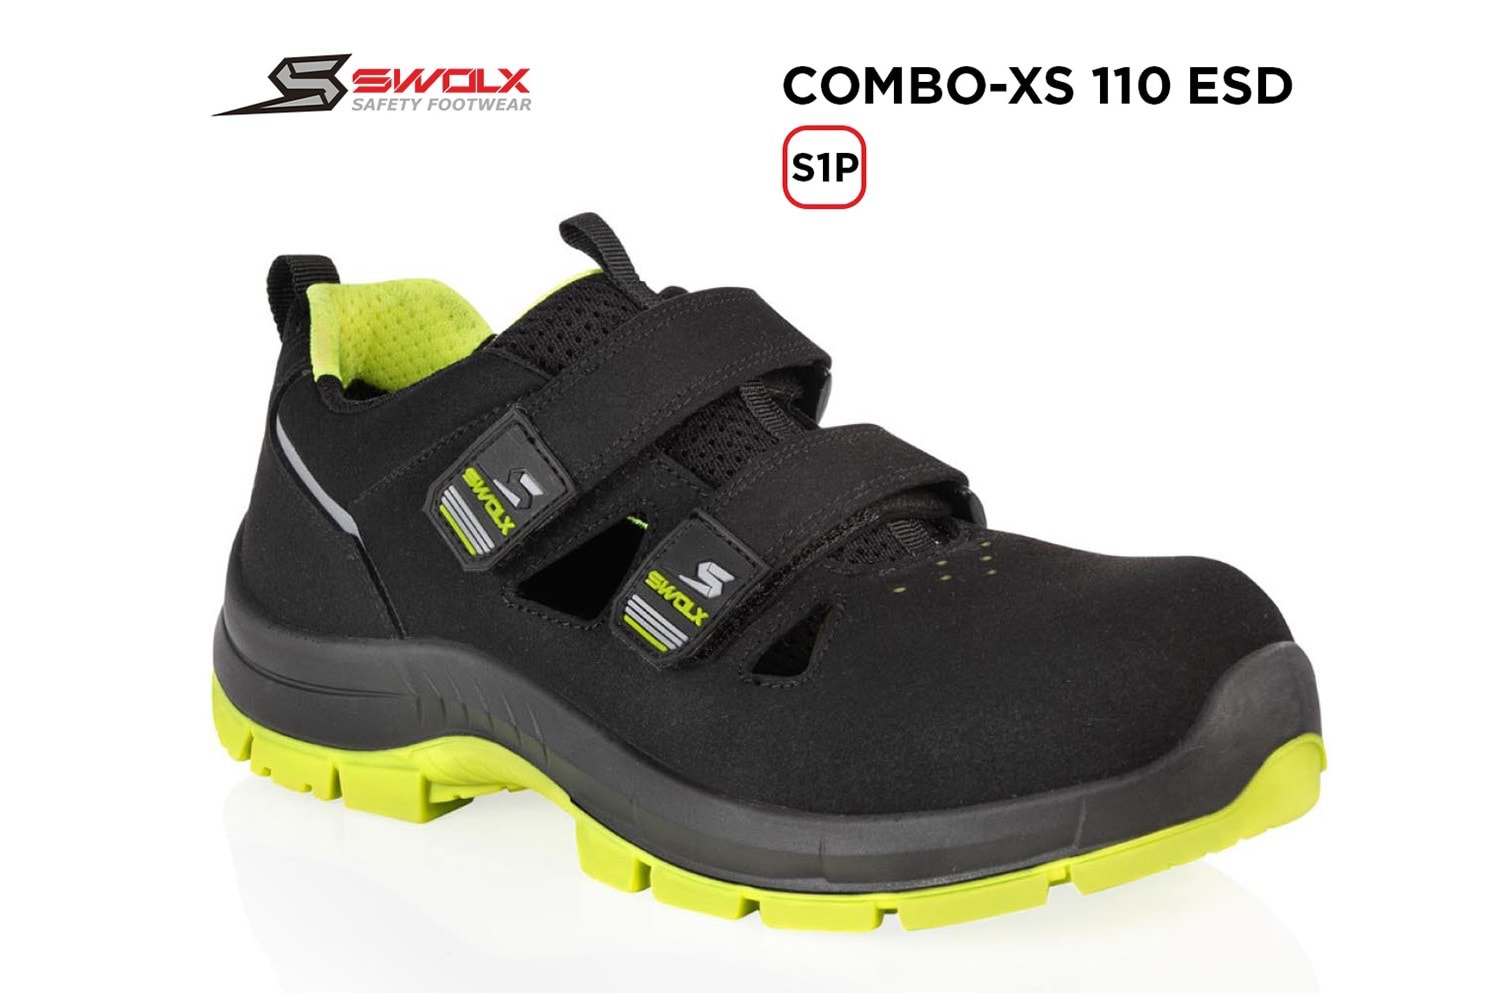 Swolx İş Ayakkabısı - Combo-Xs 110 ESD S1P - 42